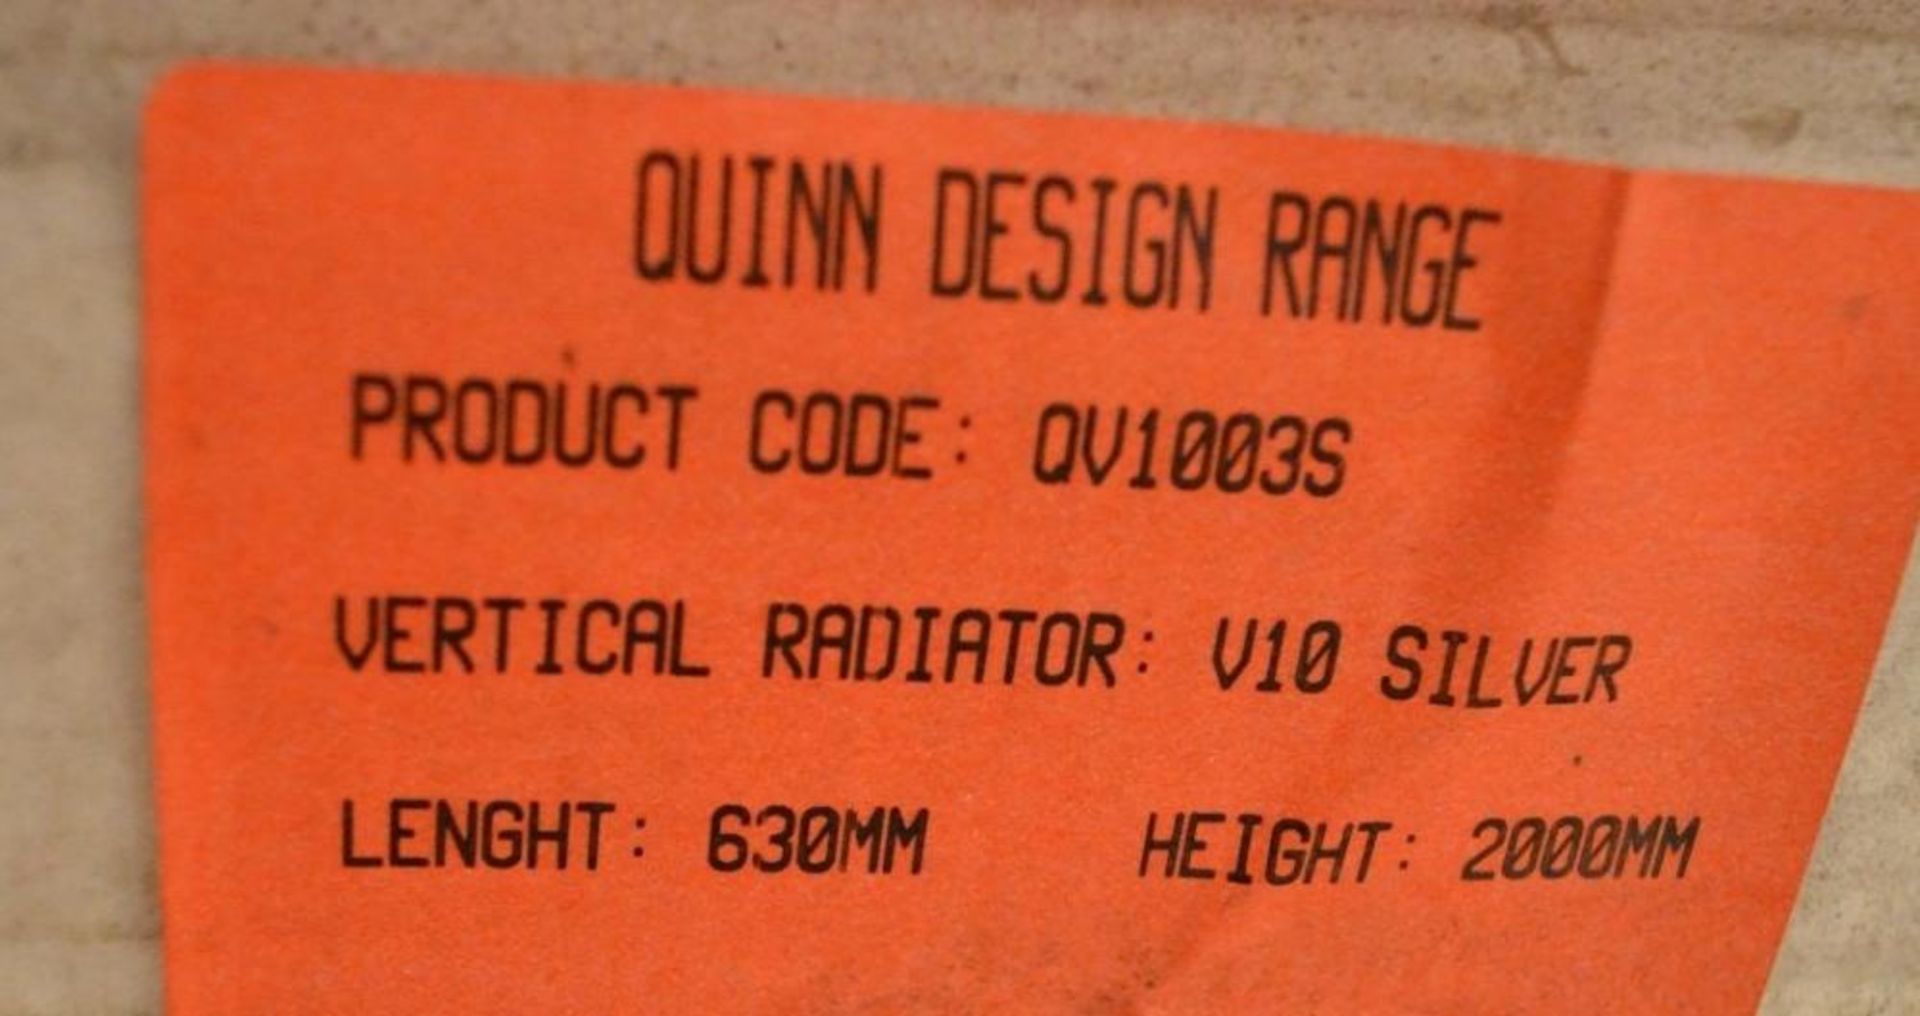 1 x Quinn Slieve Designer Single Panel Vertical Radiator in Matt Silver - Contemporary Design - Will - Image 3 of 5